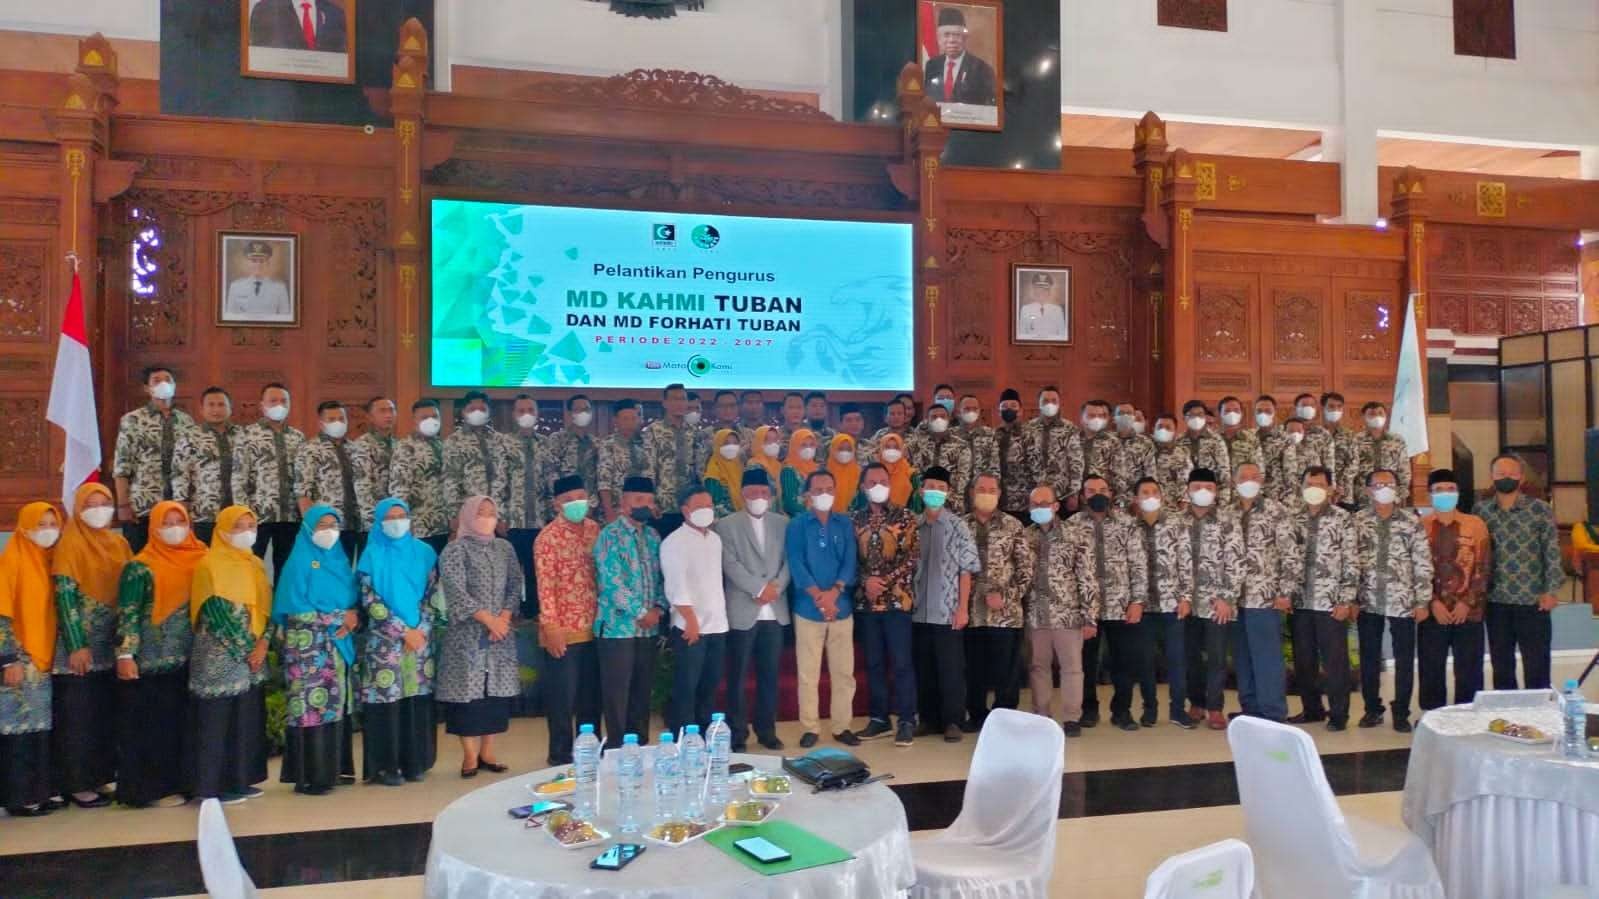 Pengurus Majelis Daerah (MD) Korps Alumni HMI (Kahmi) dan FORHATI Tuban periode 2022-2027. (Foto: Istimewa)